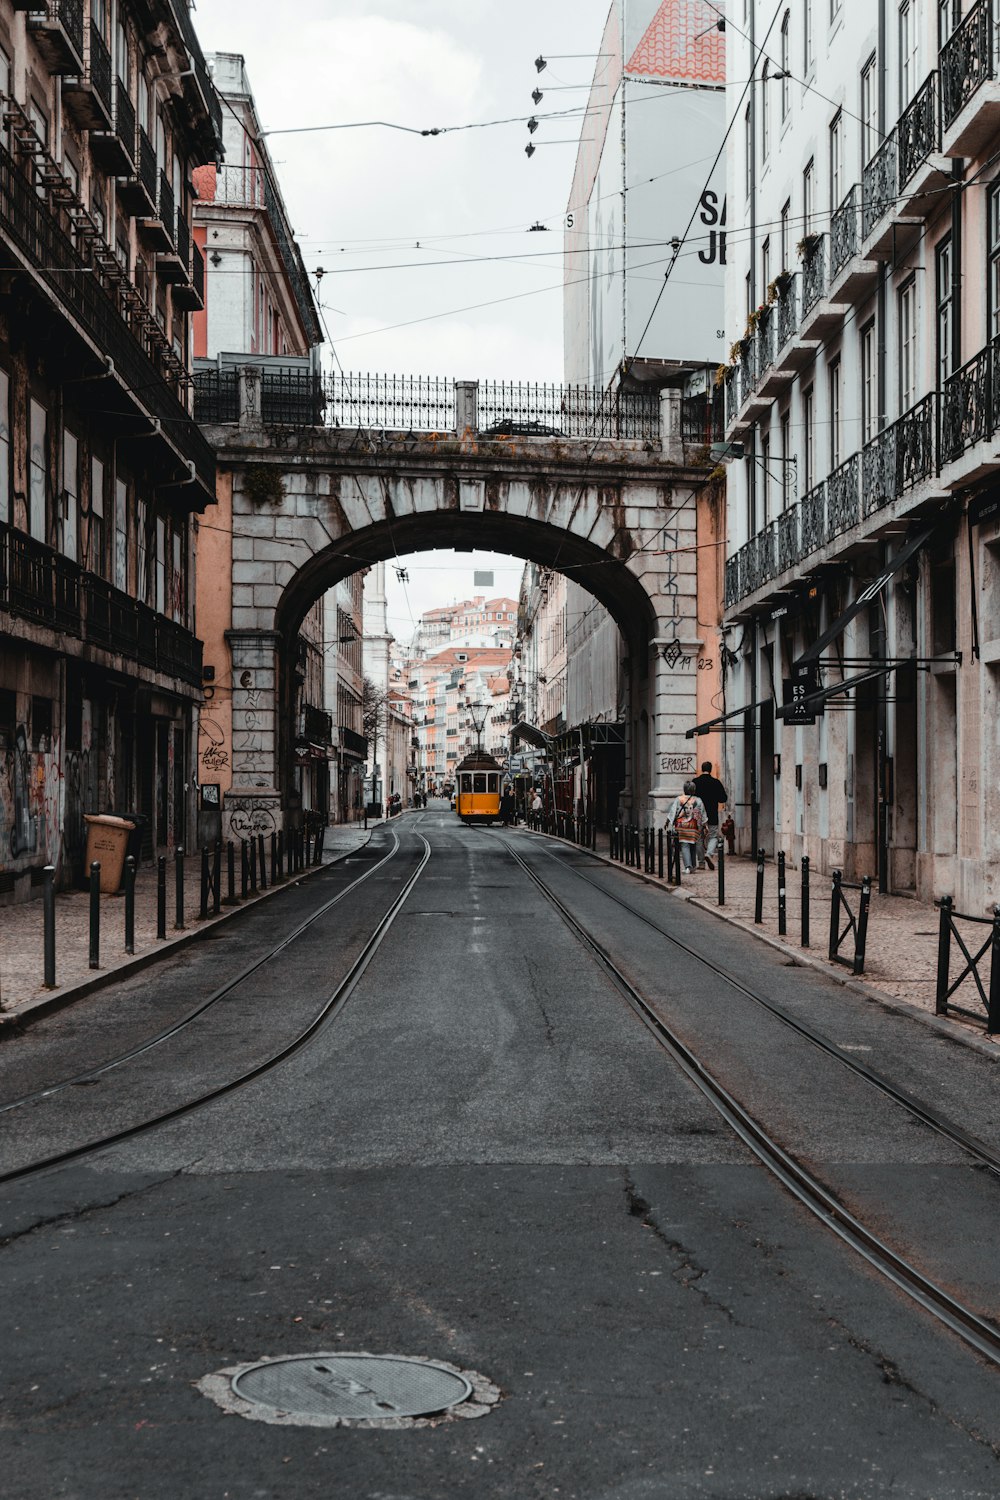 a street with a train going under a bridge